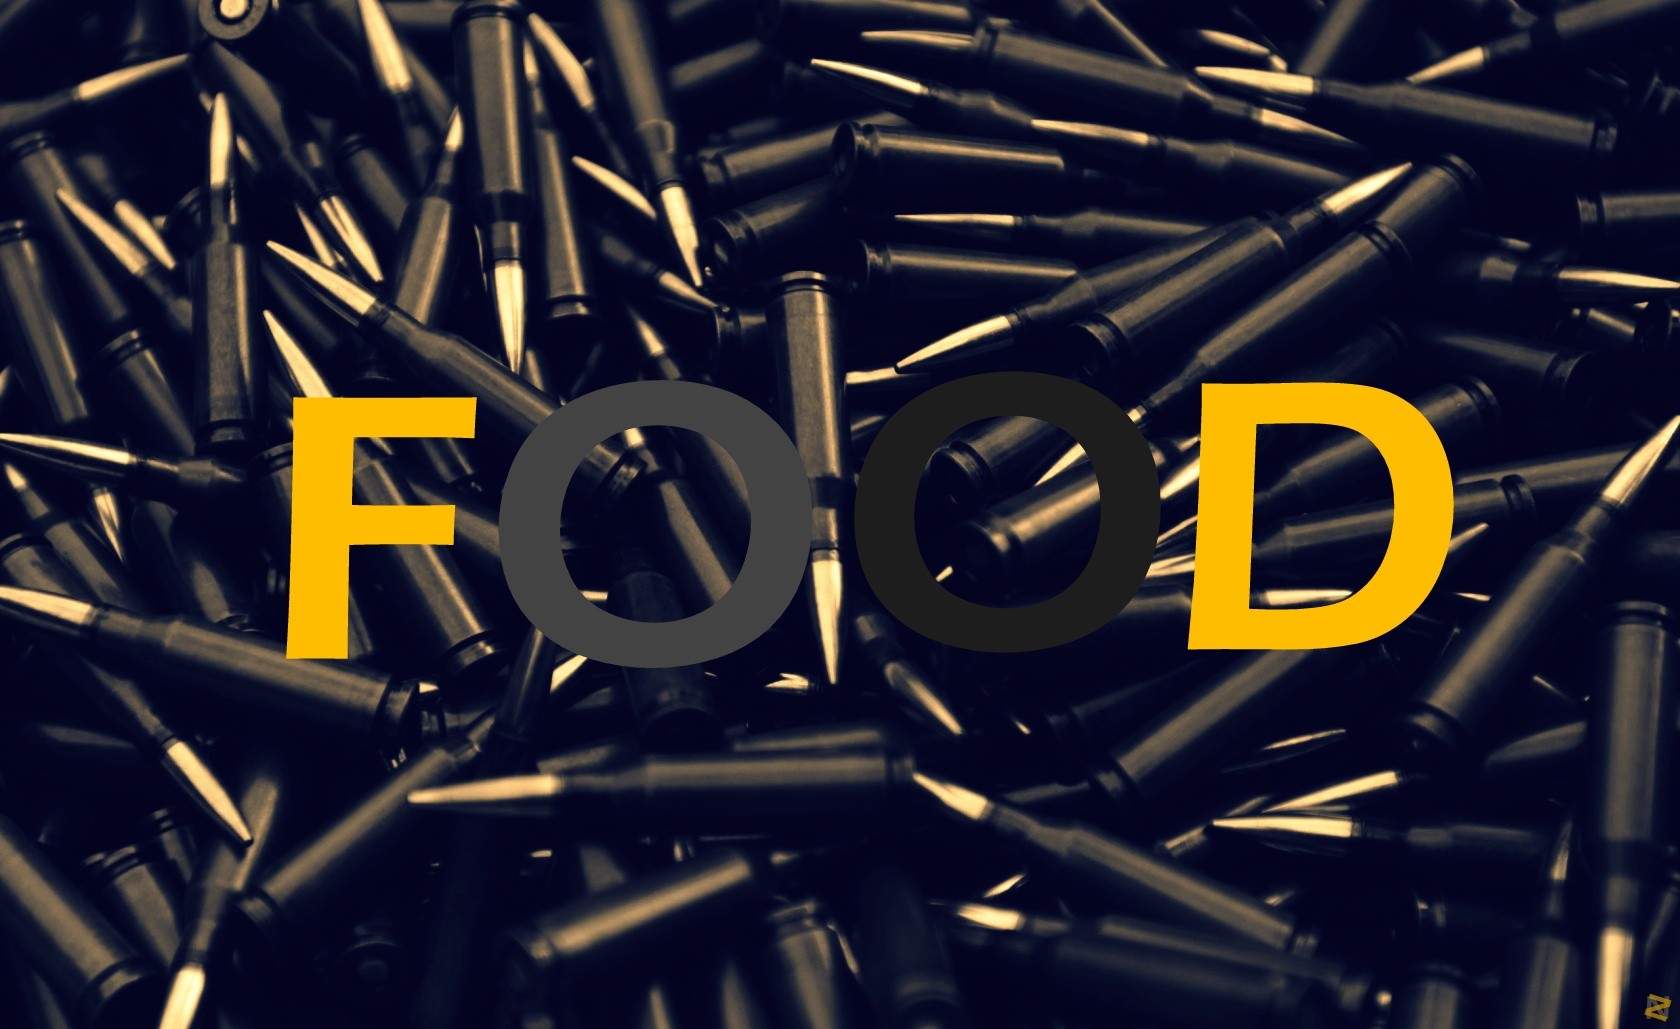 General 1680x1029 military ammunition typography text artwork digital art food yellow politics